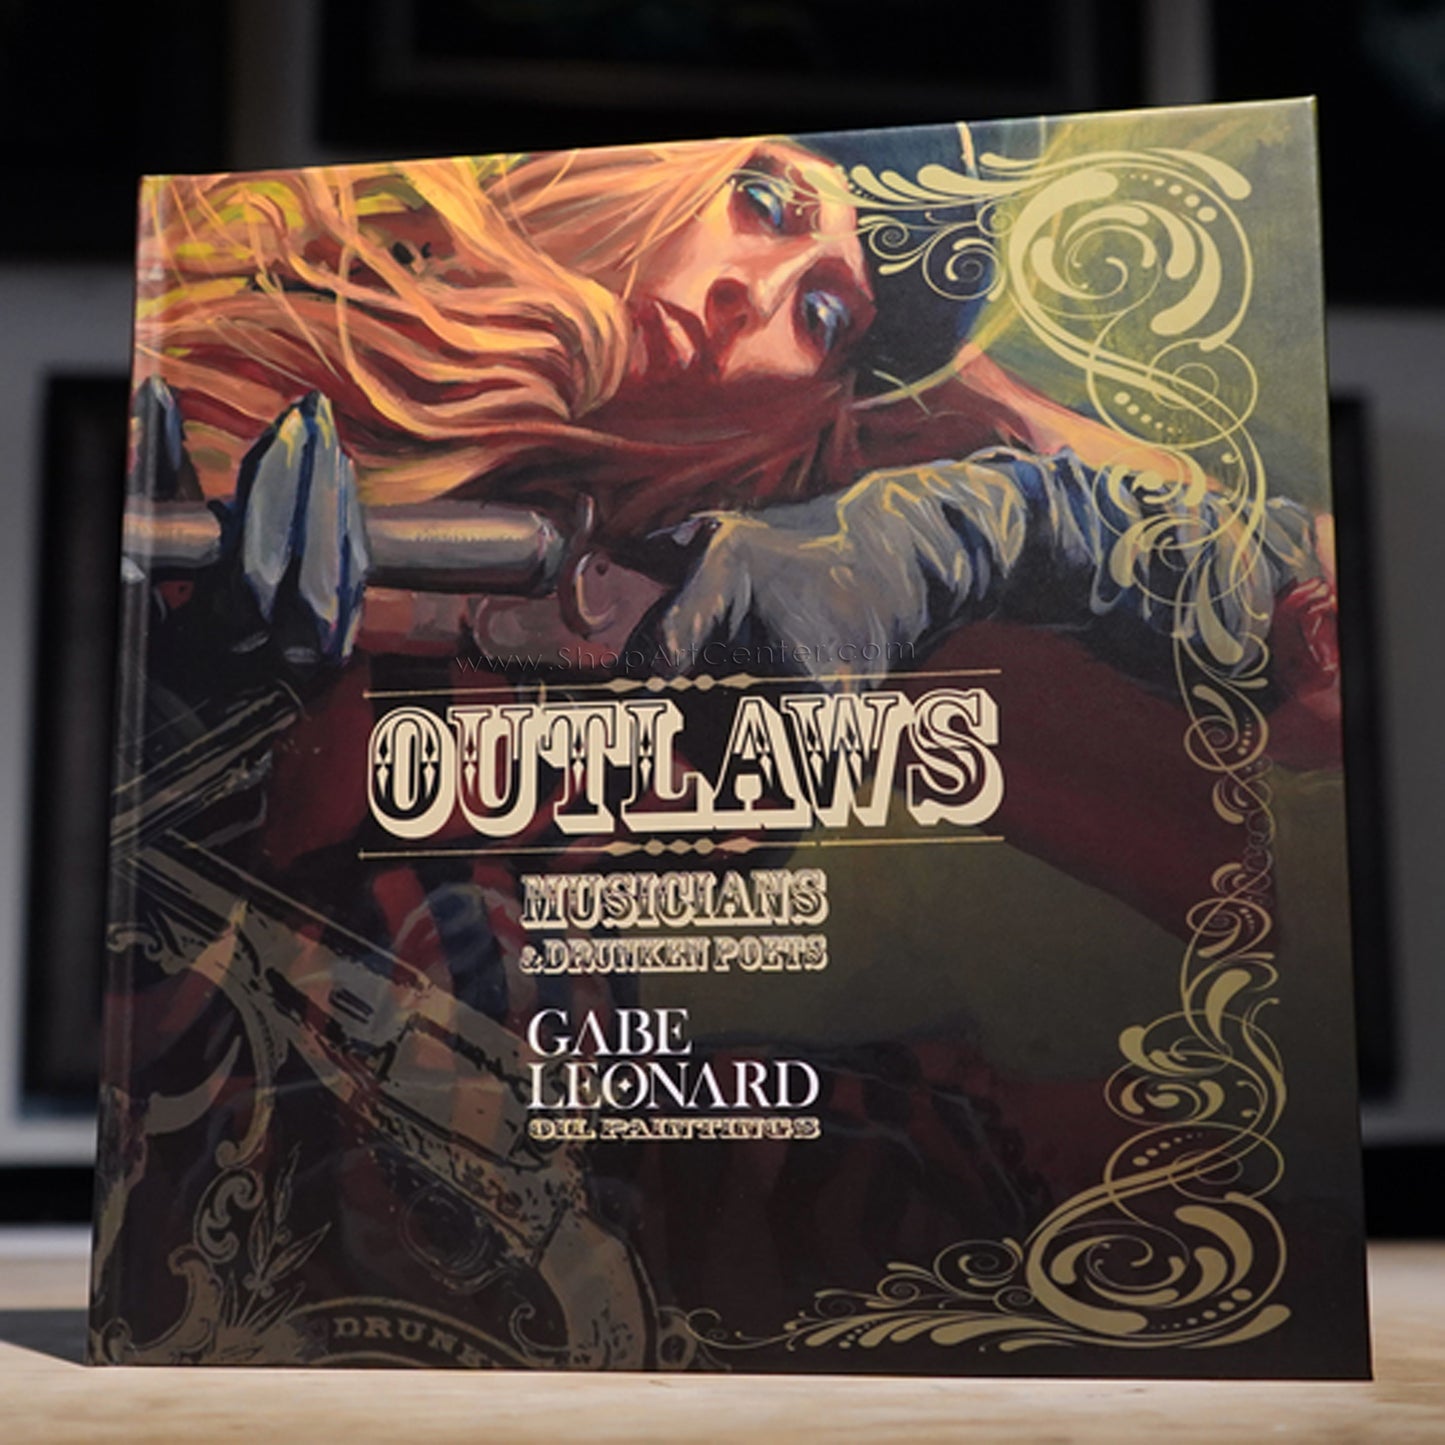 Gabe Leonard "Outlaws, Musicians and Drunken Poets" Book